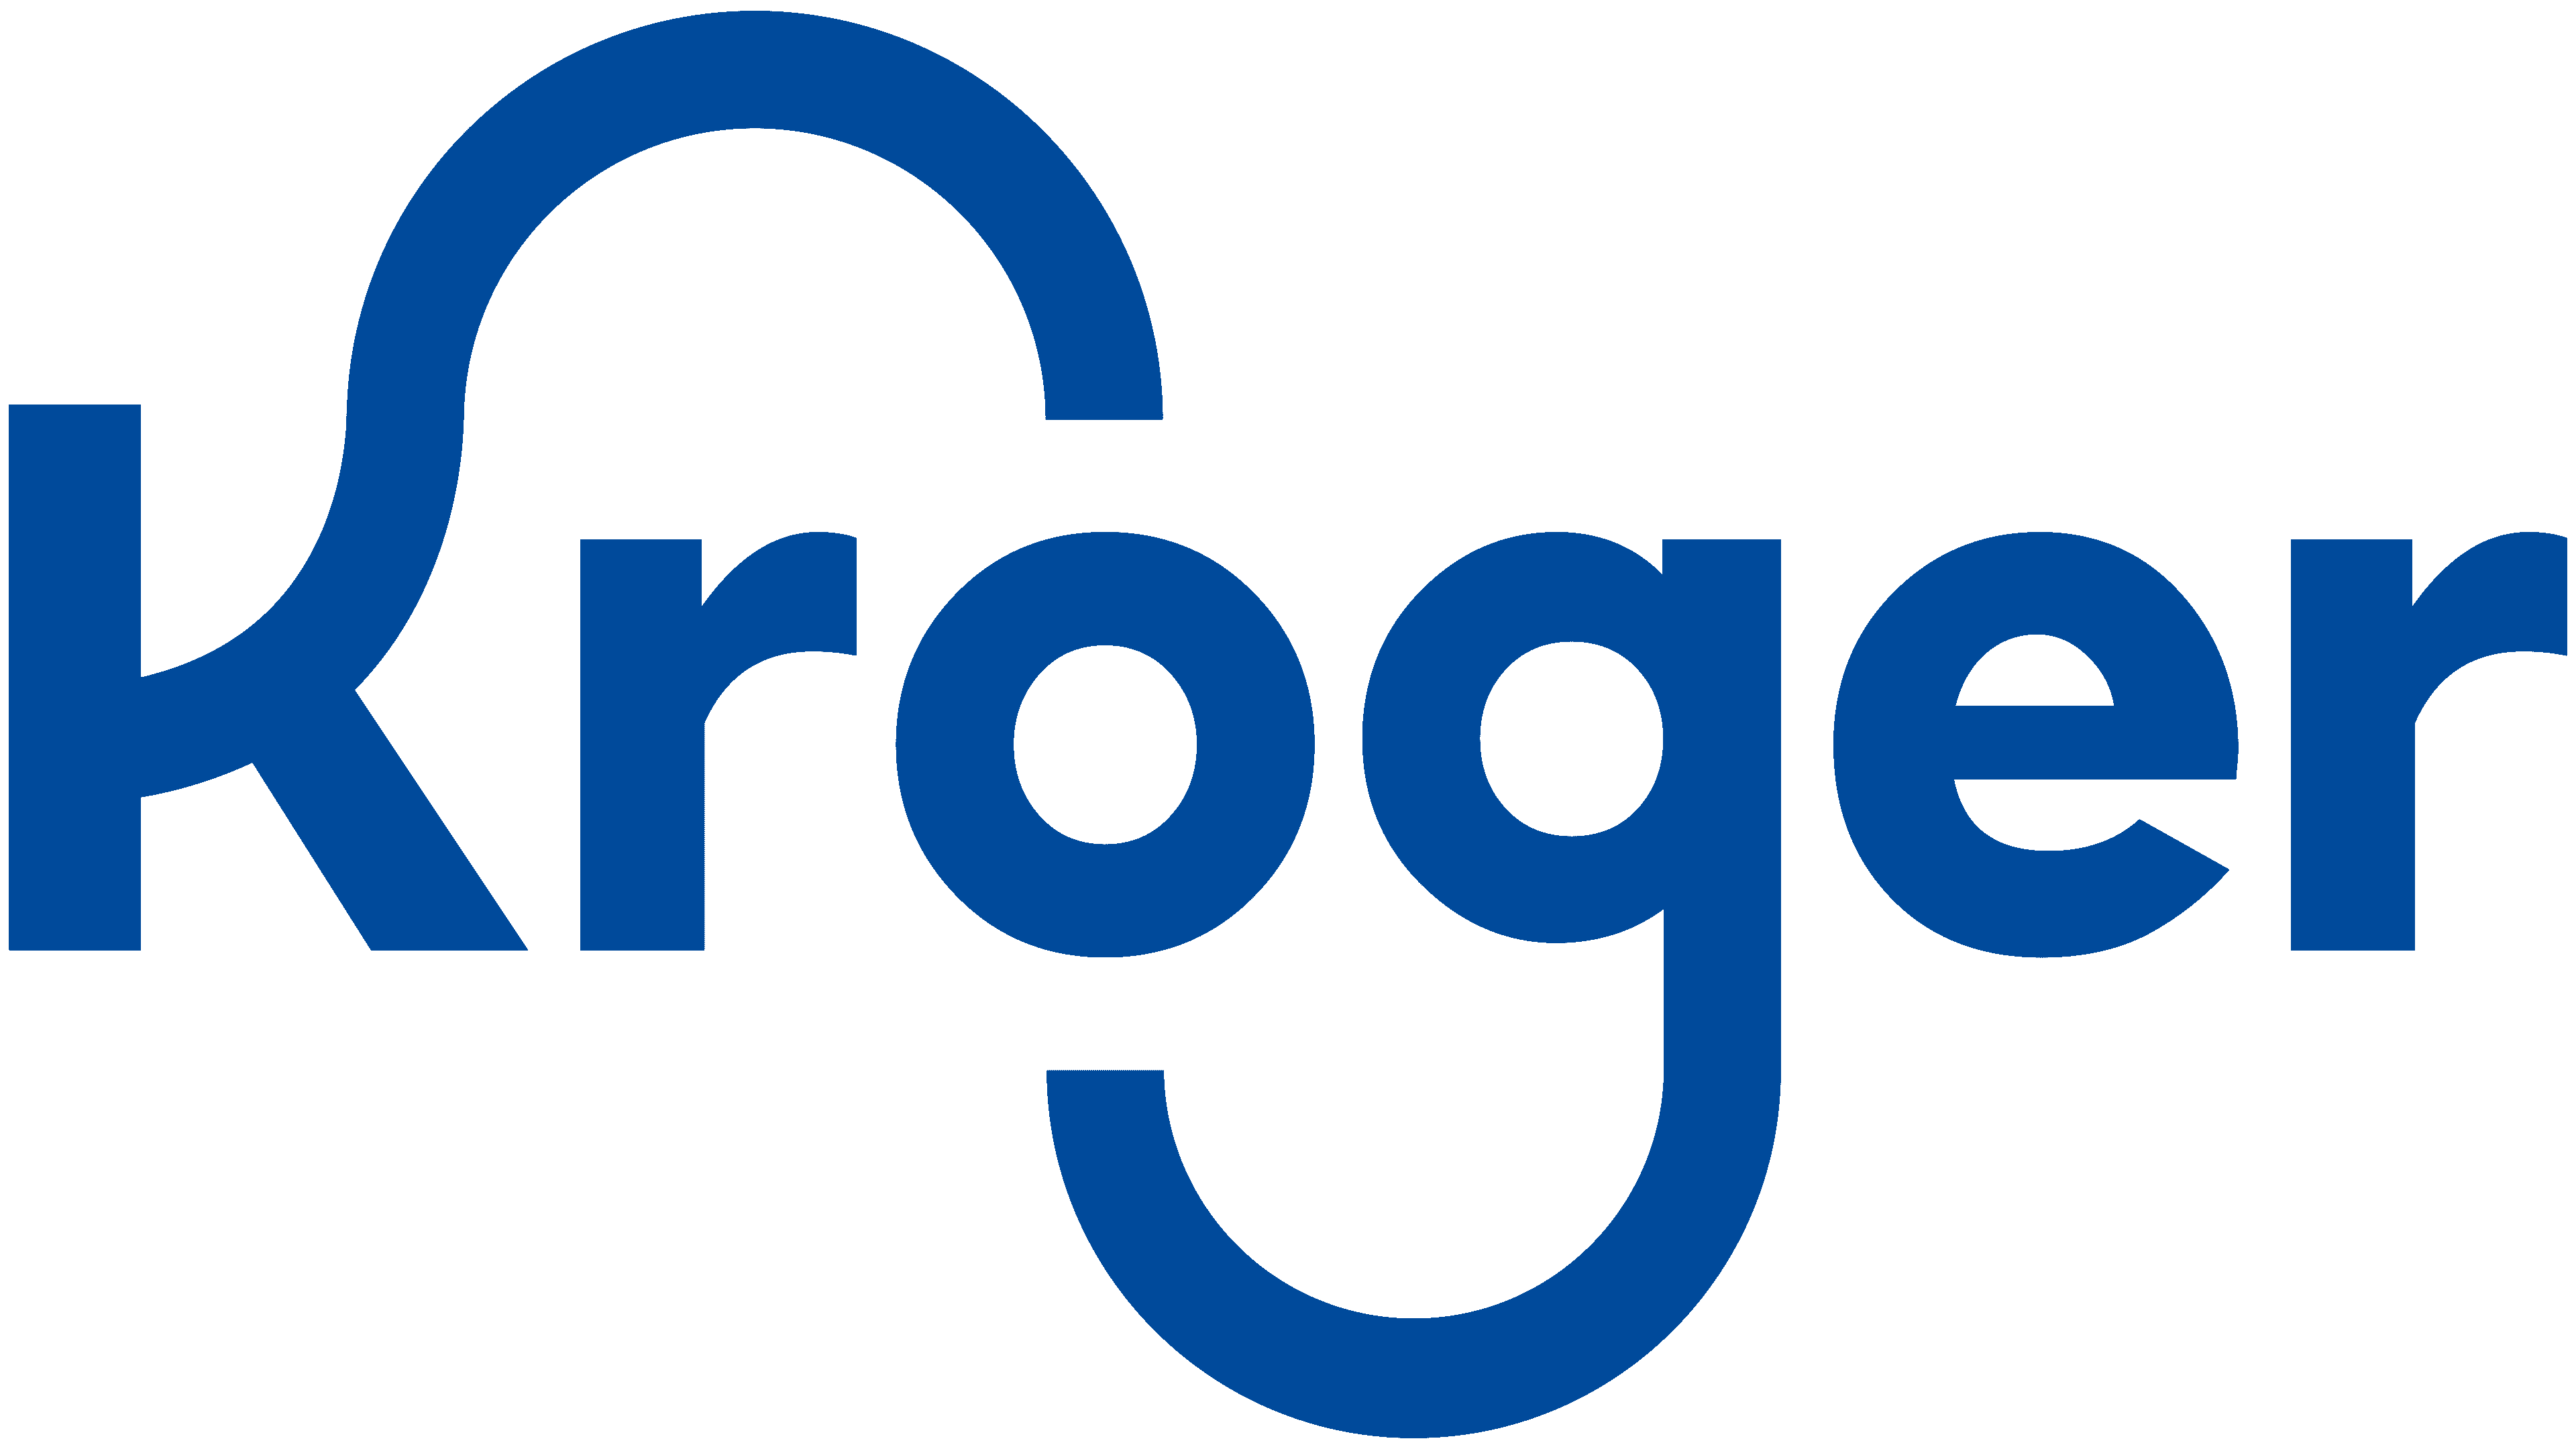 Kroger Product Data Scraper